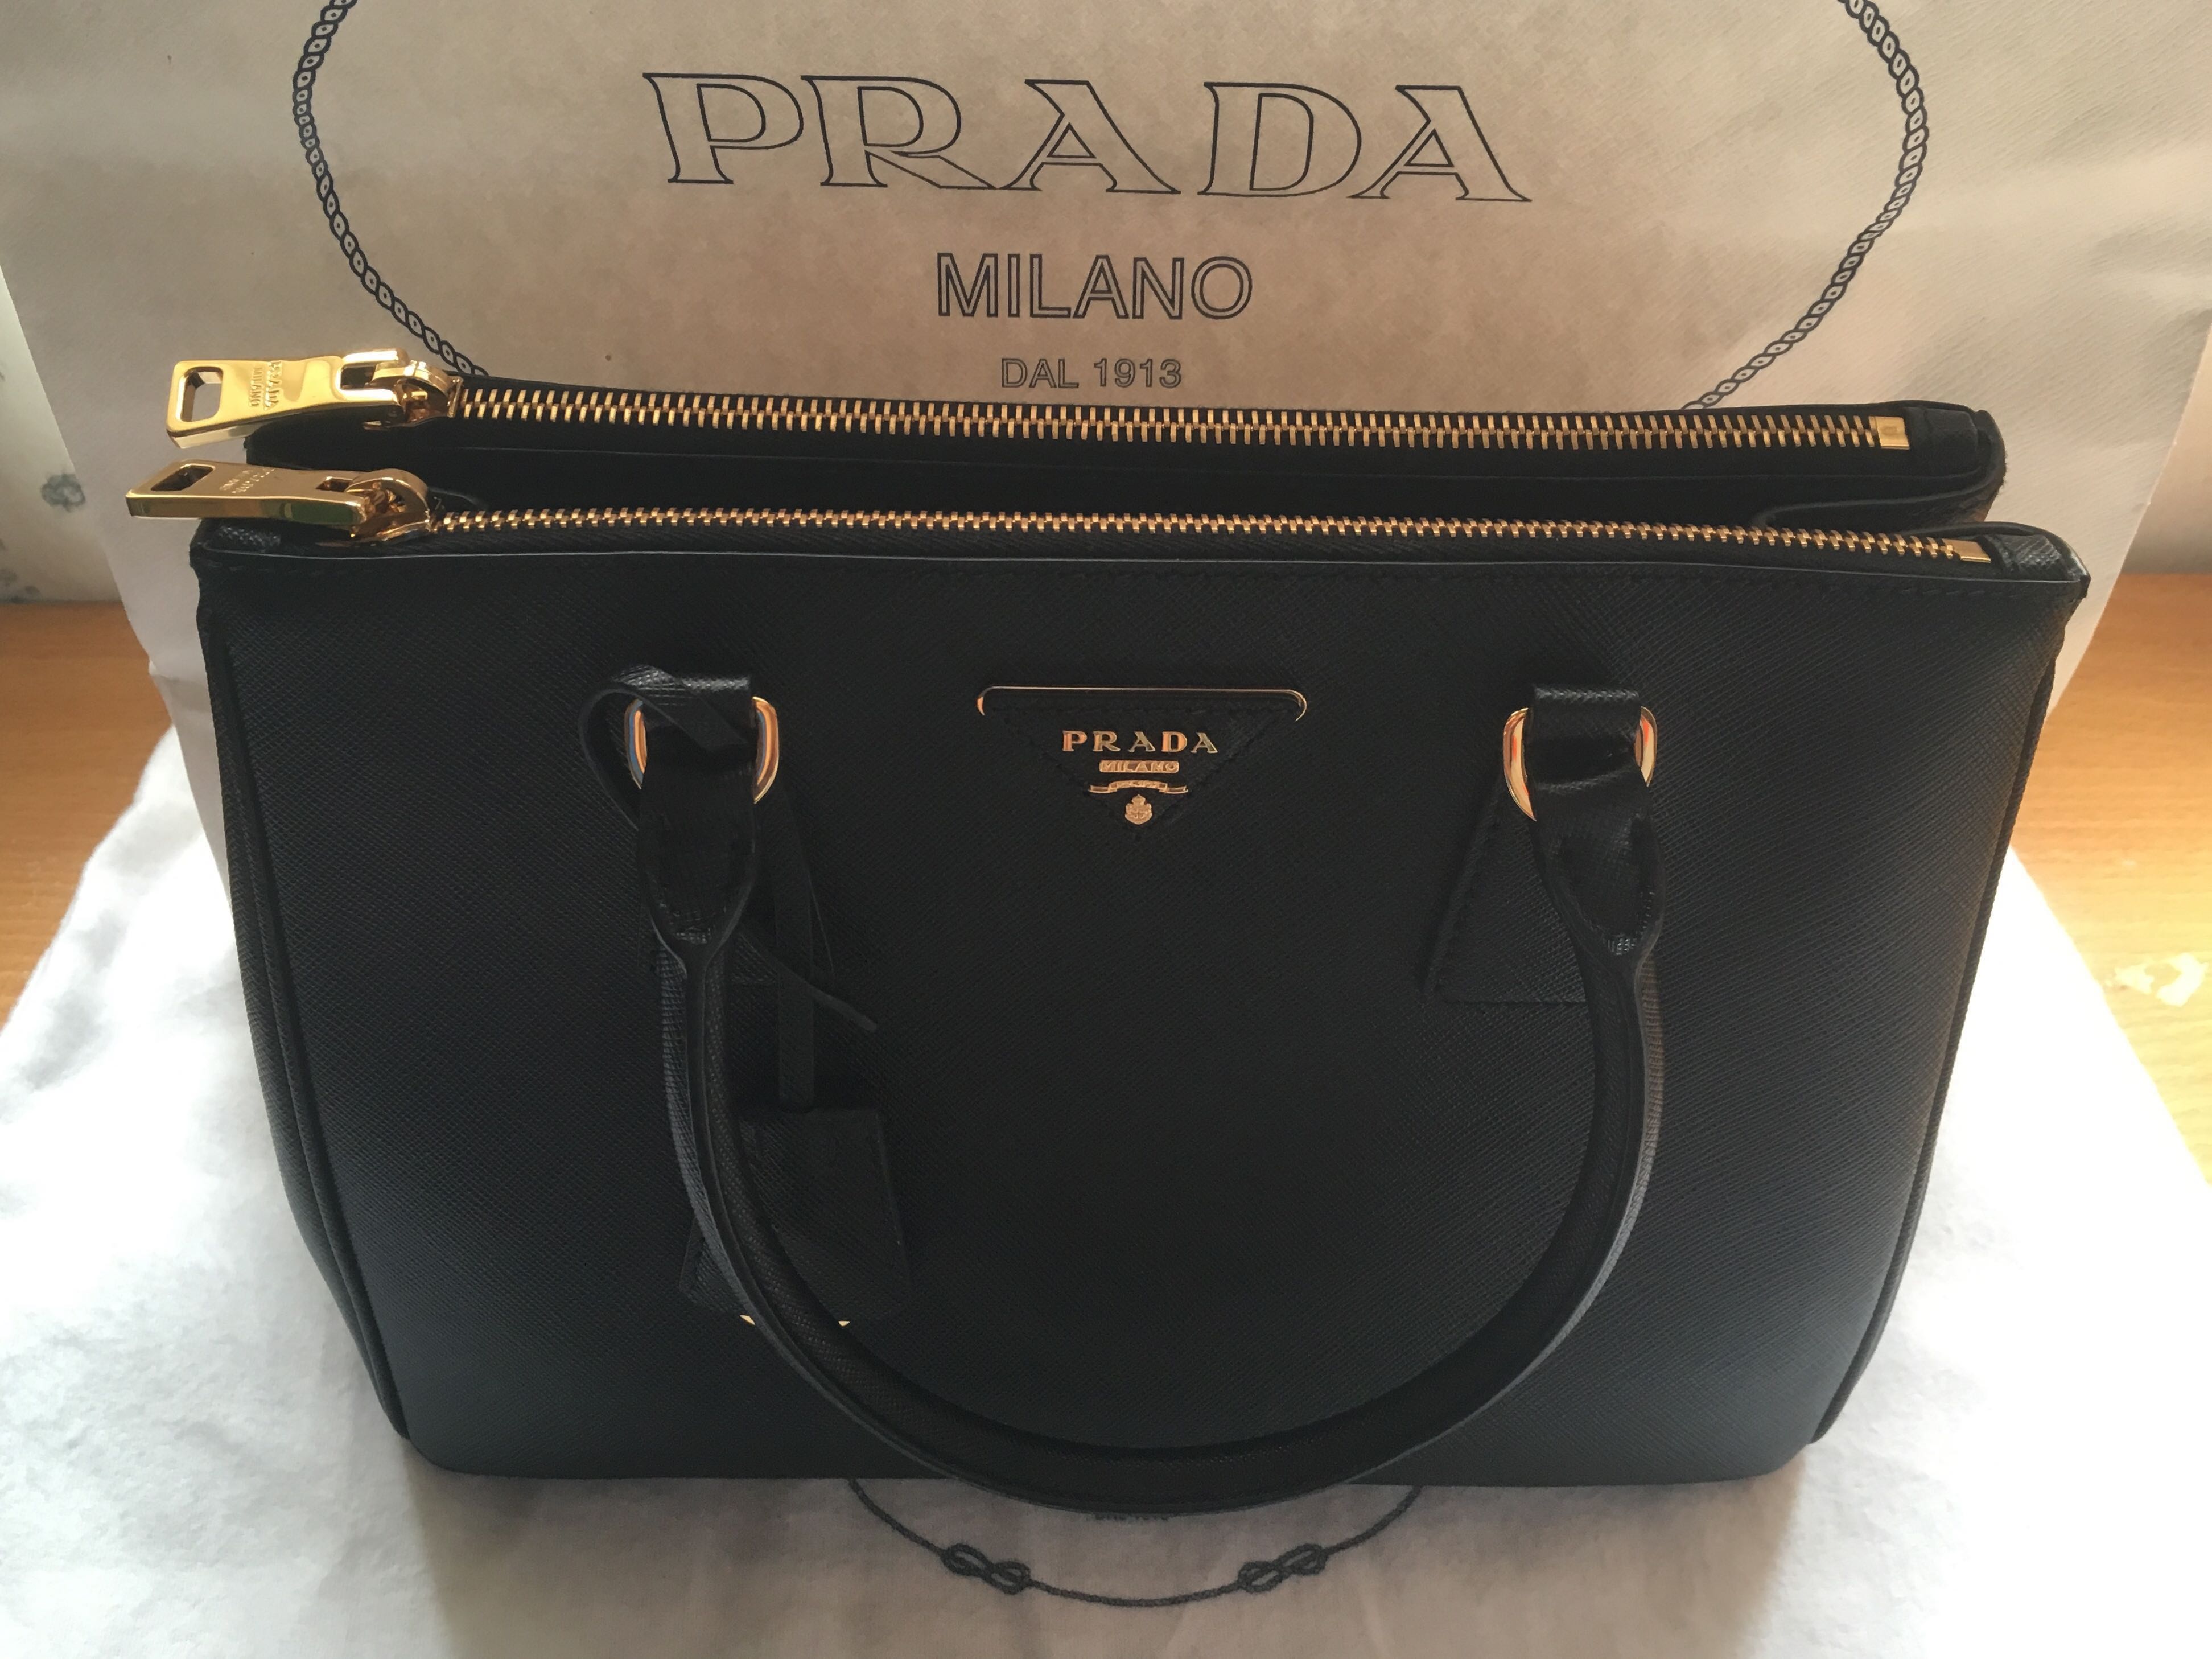 Prada Medium Galleria Double Zip Tote in Nero (Black) Saffiano Lux - SOLD